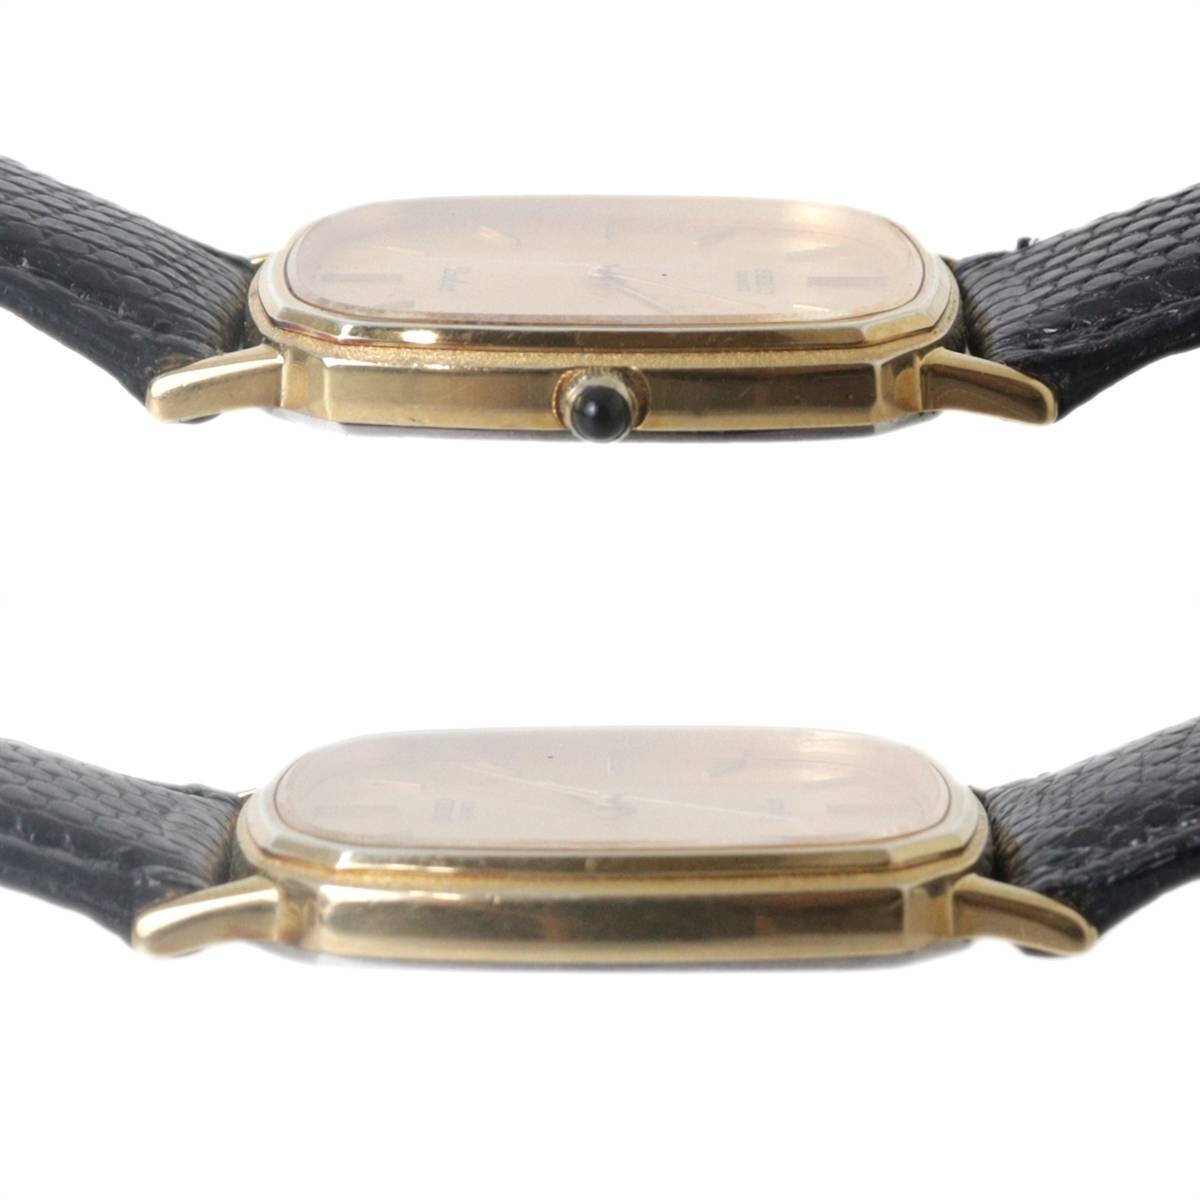 [ used ] SEIKO Seiko Dolce Dolce men's quartz wristwatch after market belt 6030-5550 arm around approximately 16~20cm(7 hole adjustment ) NT BC rank 